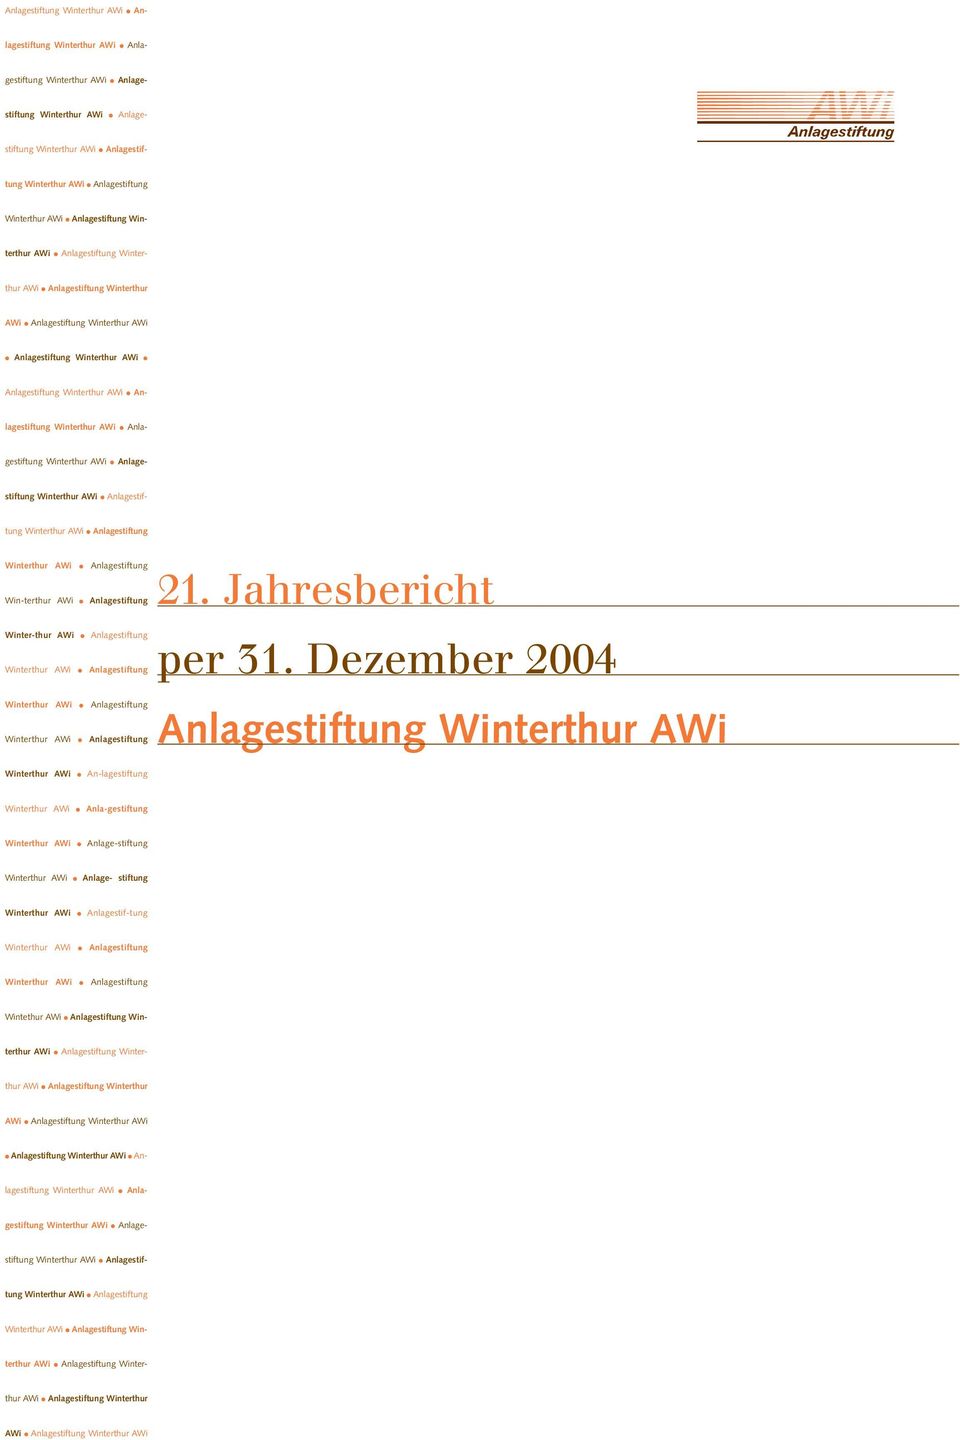 Winter-thur AWi Anlagestiftung Winterthur AWi Anlagestiftung Winterthur AWi Anlagestiftung Winterthur AWi Anlagestiftung Winterthur AWi An-lagestiftung 21. Jahresbericht per 31.